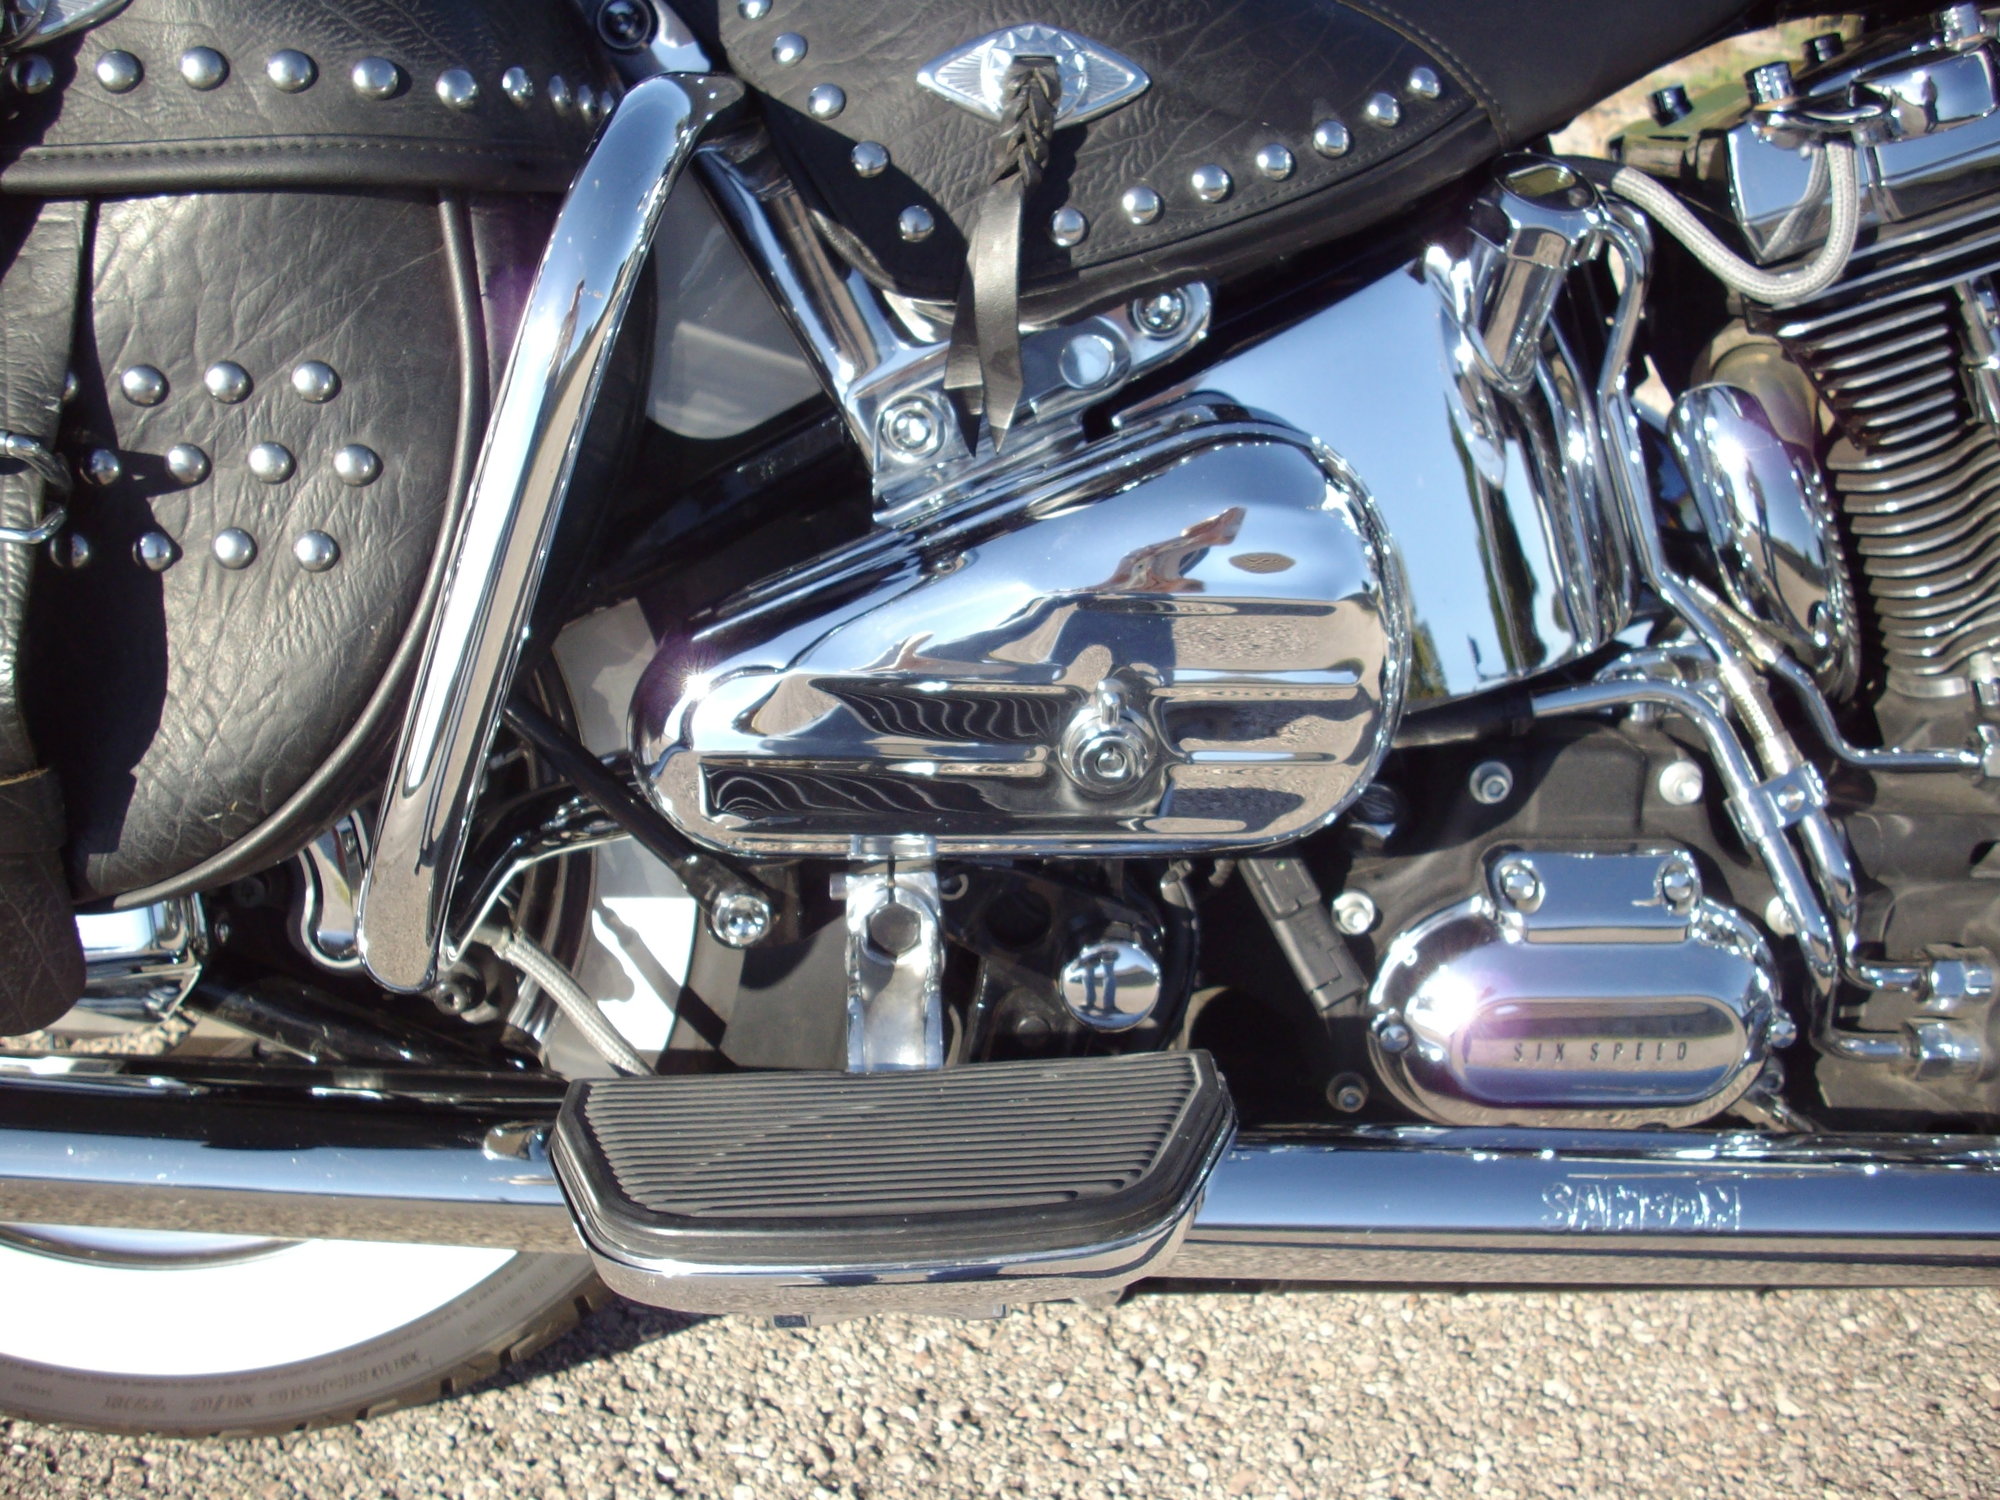 Chrome Toolbox For 2016 Heritage Harley Davidson Forums